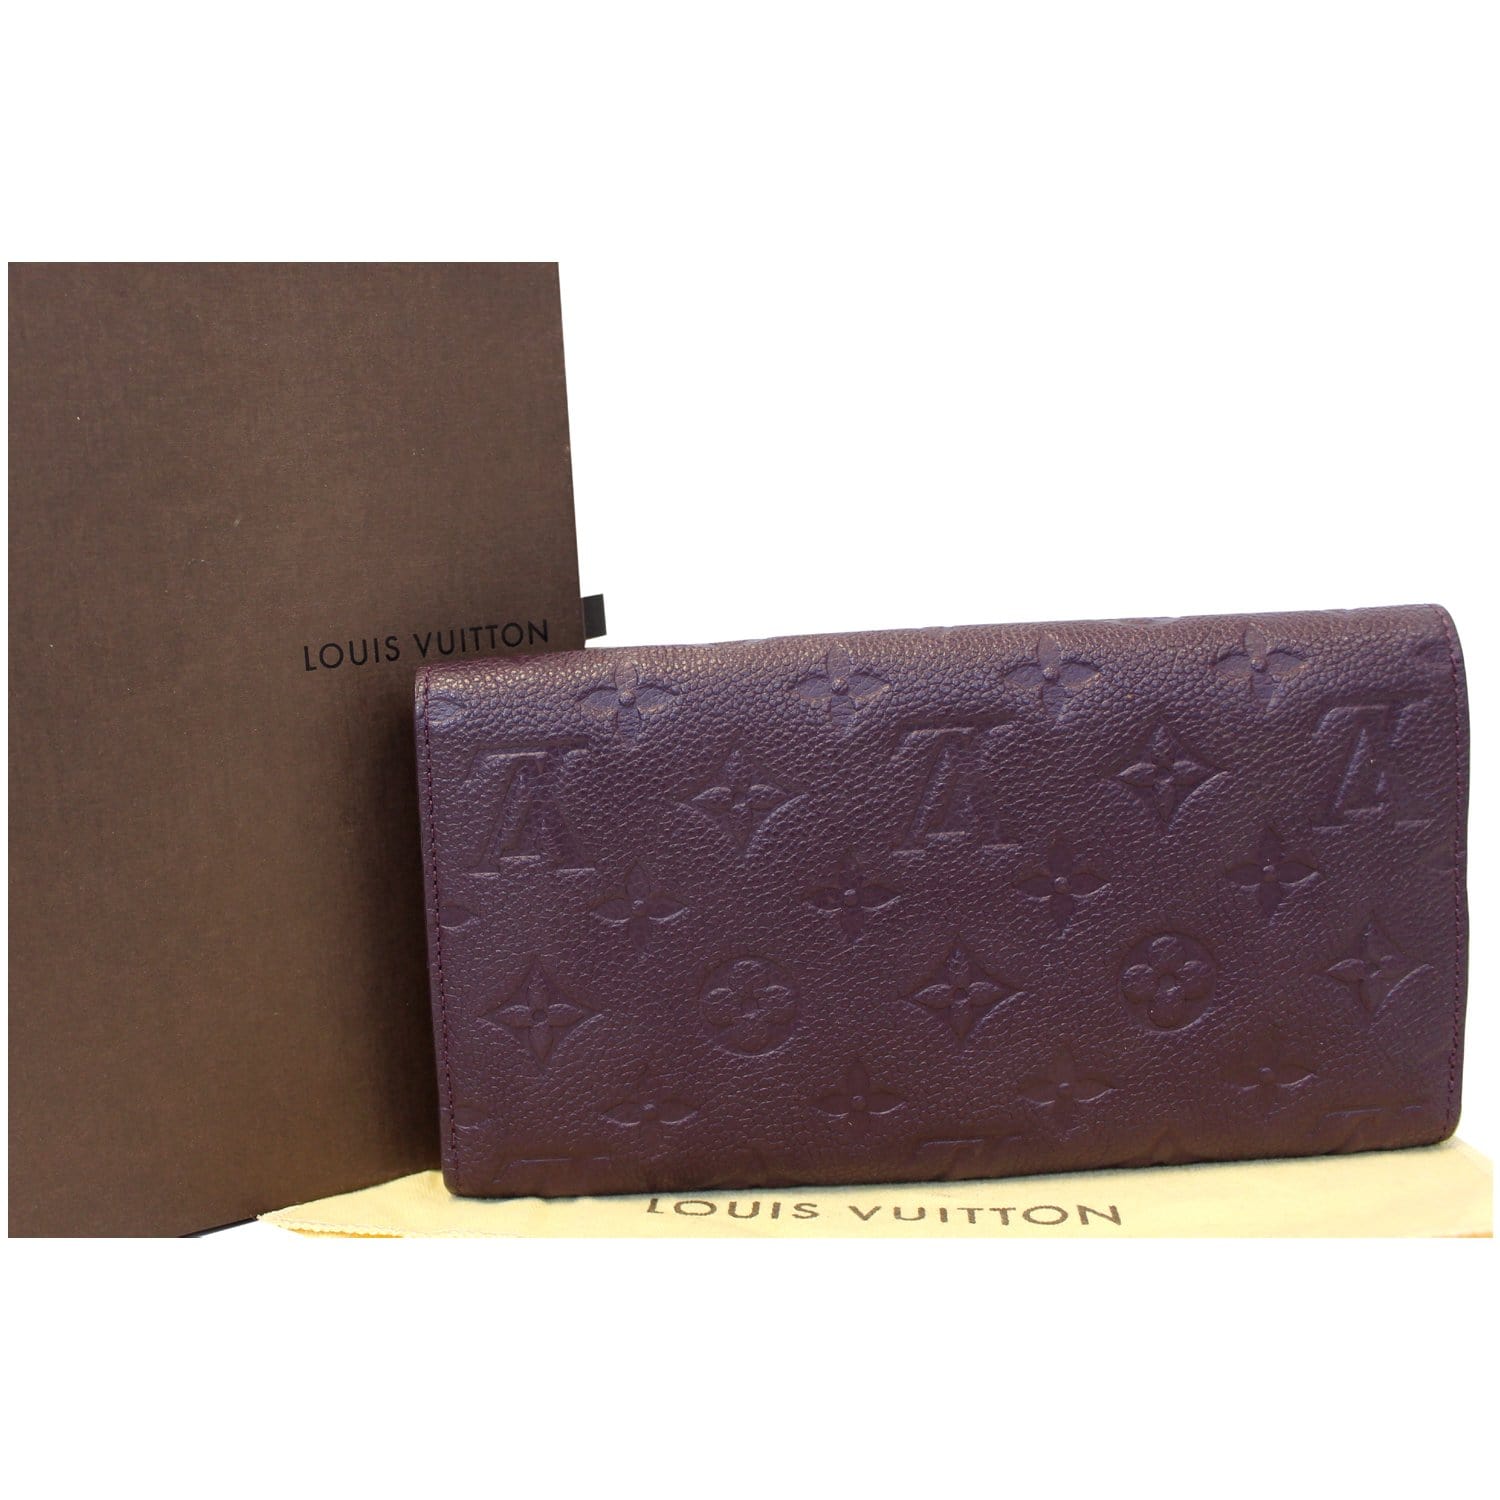 louis vuitton wallet purple